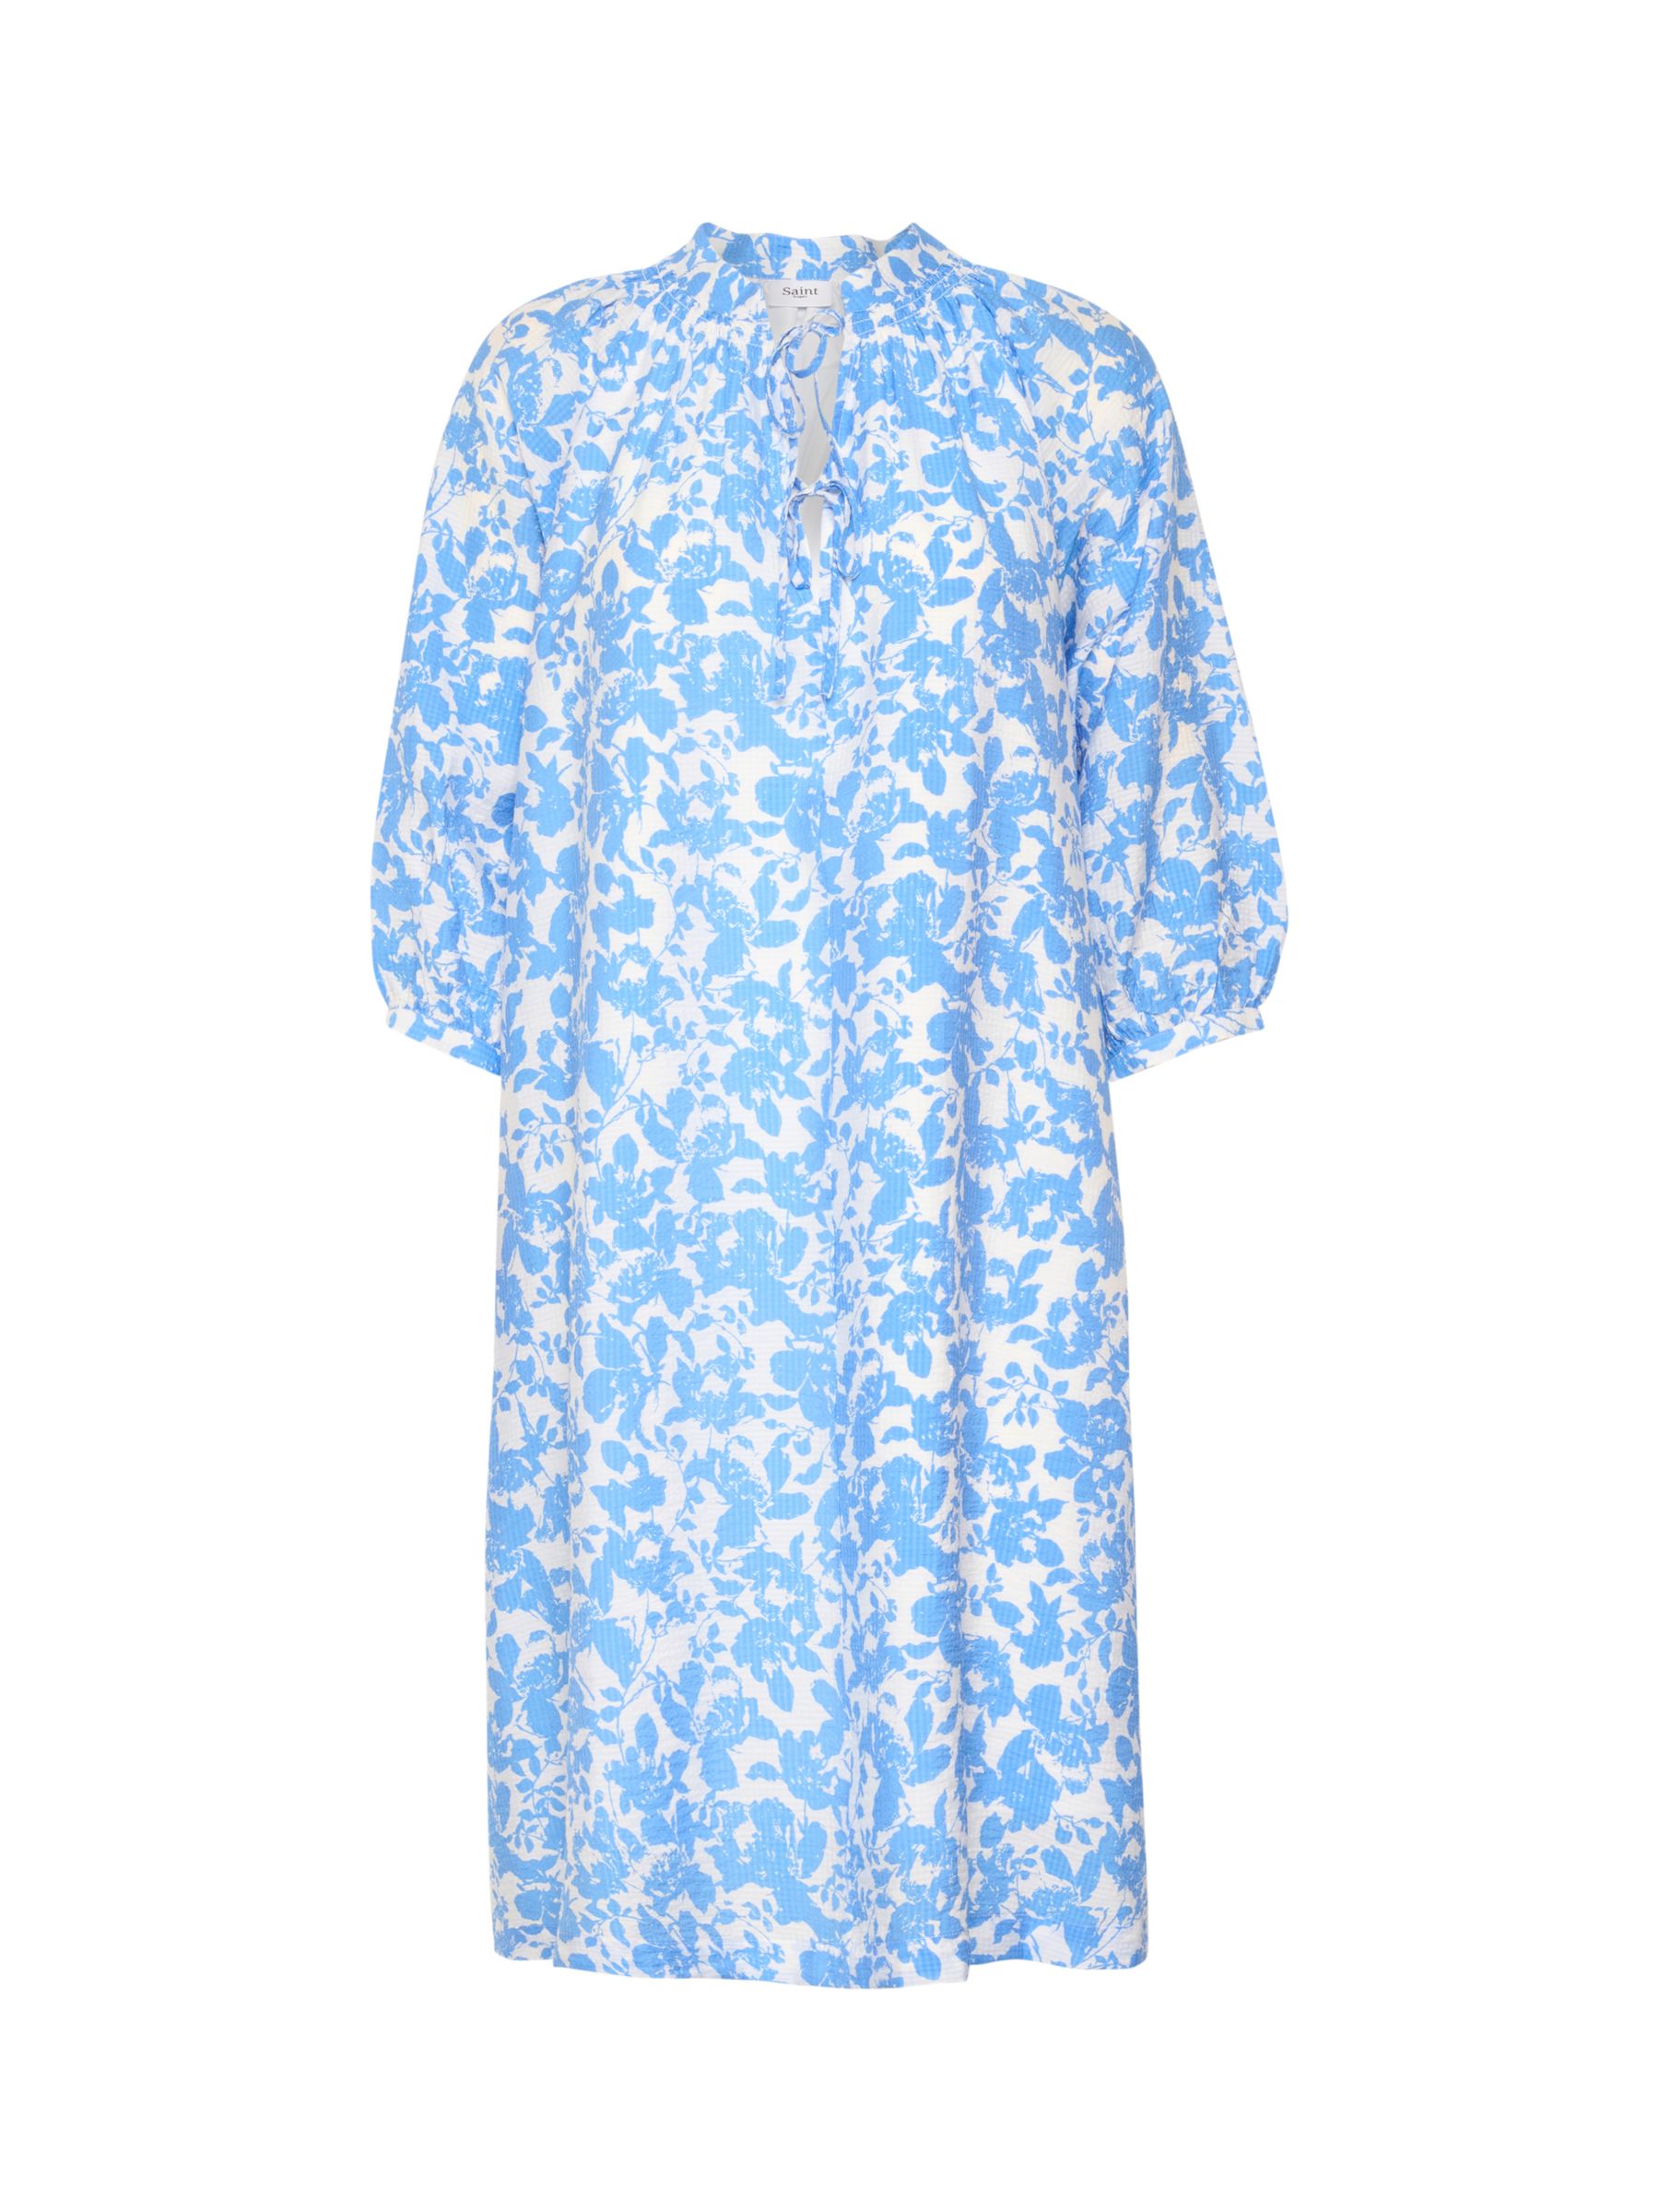 Saint Tropez Daphne Abstract Floral Print Slip Dress, Ultramarine, XS